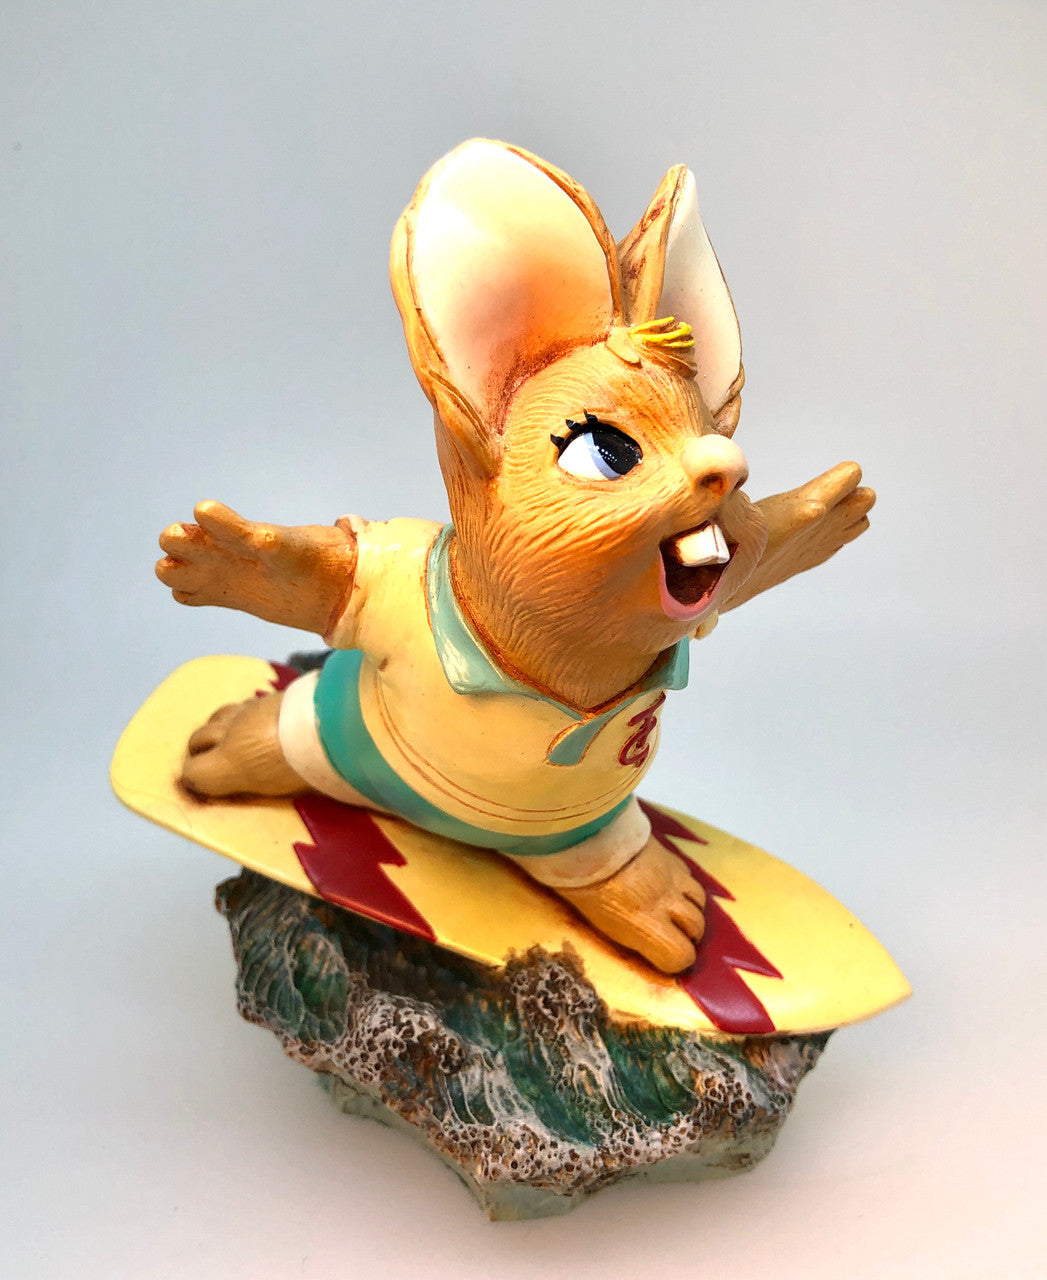 Vintage Ceramic Anthropomorphic Bunny Rabbit Figurines, Set of 2